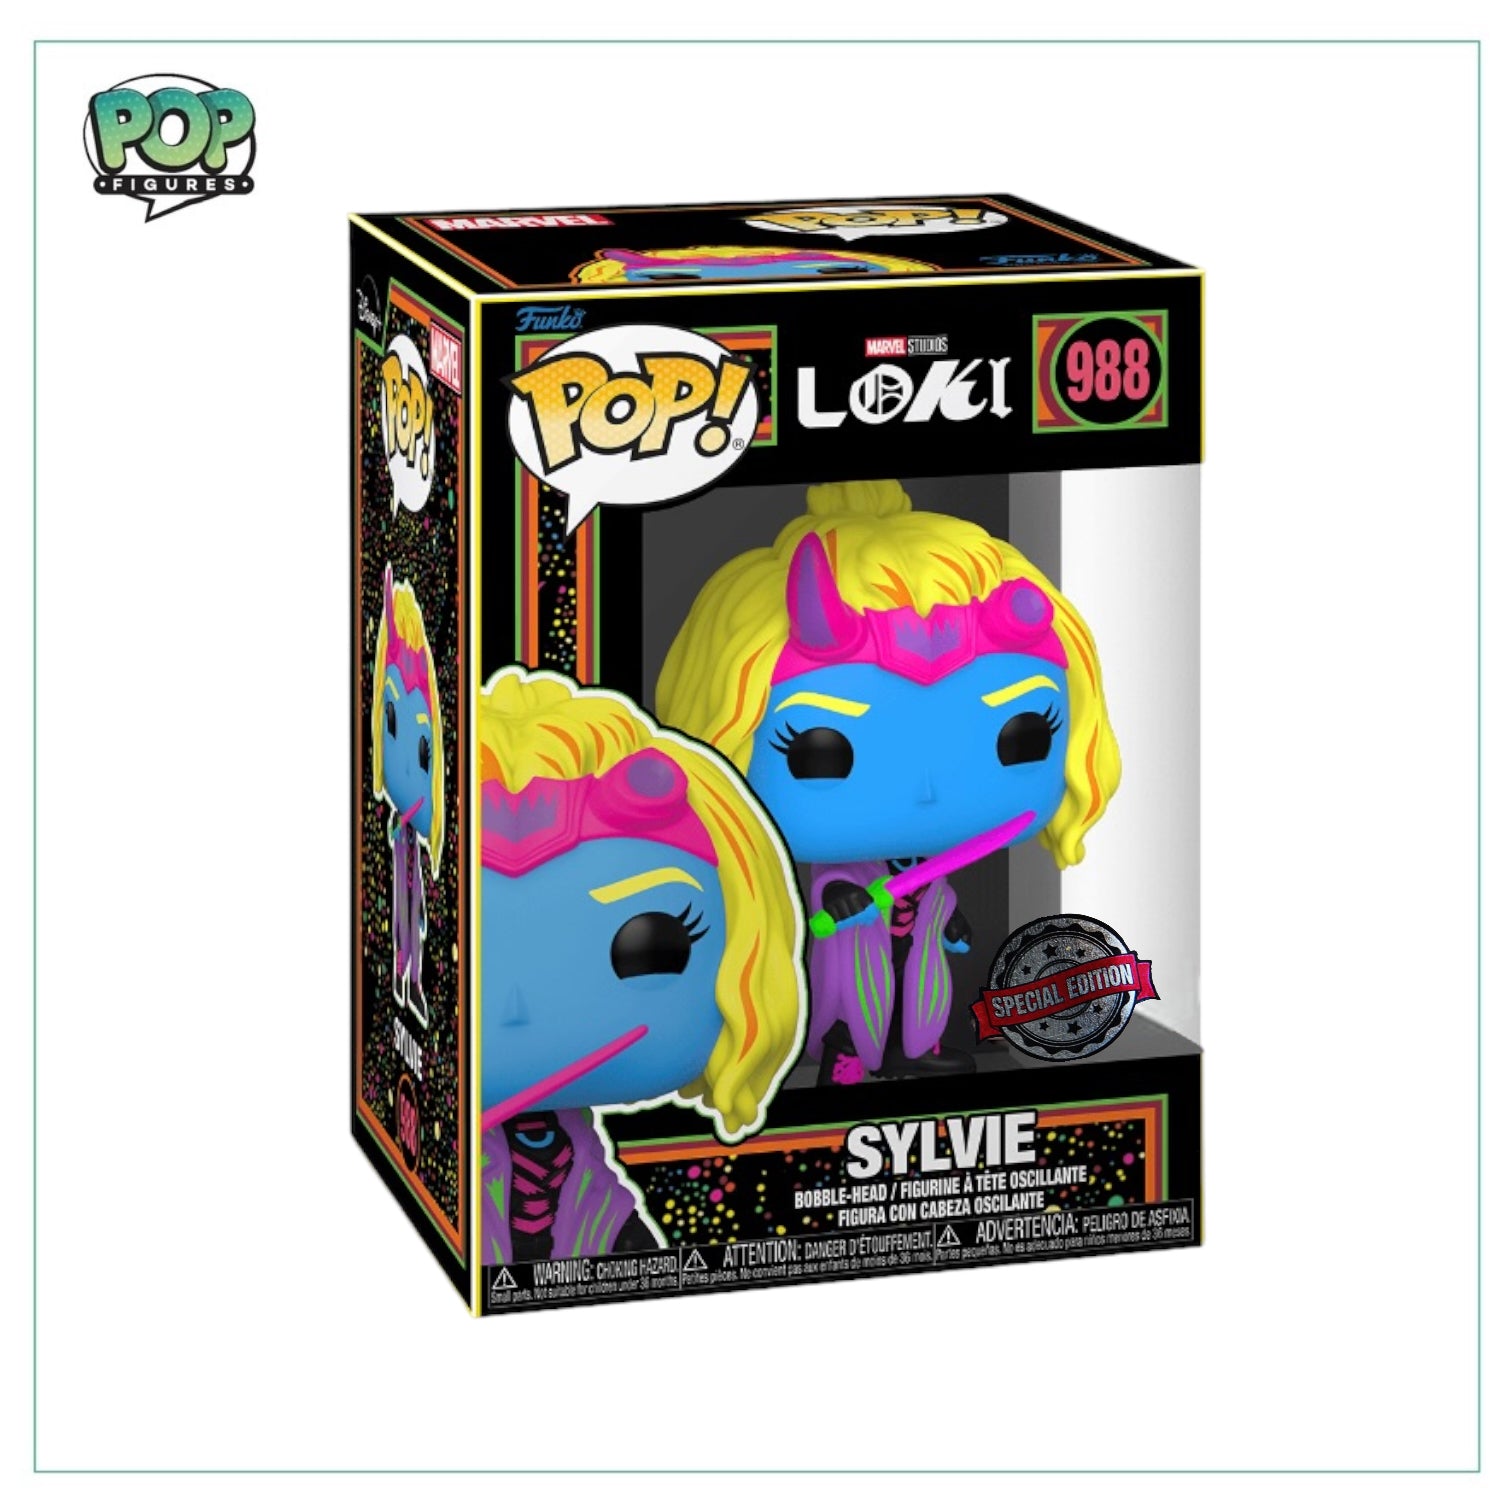 Sylvie #988 (Blacklight) Funko Pop! - Loki - Special Edition